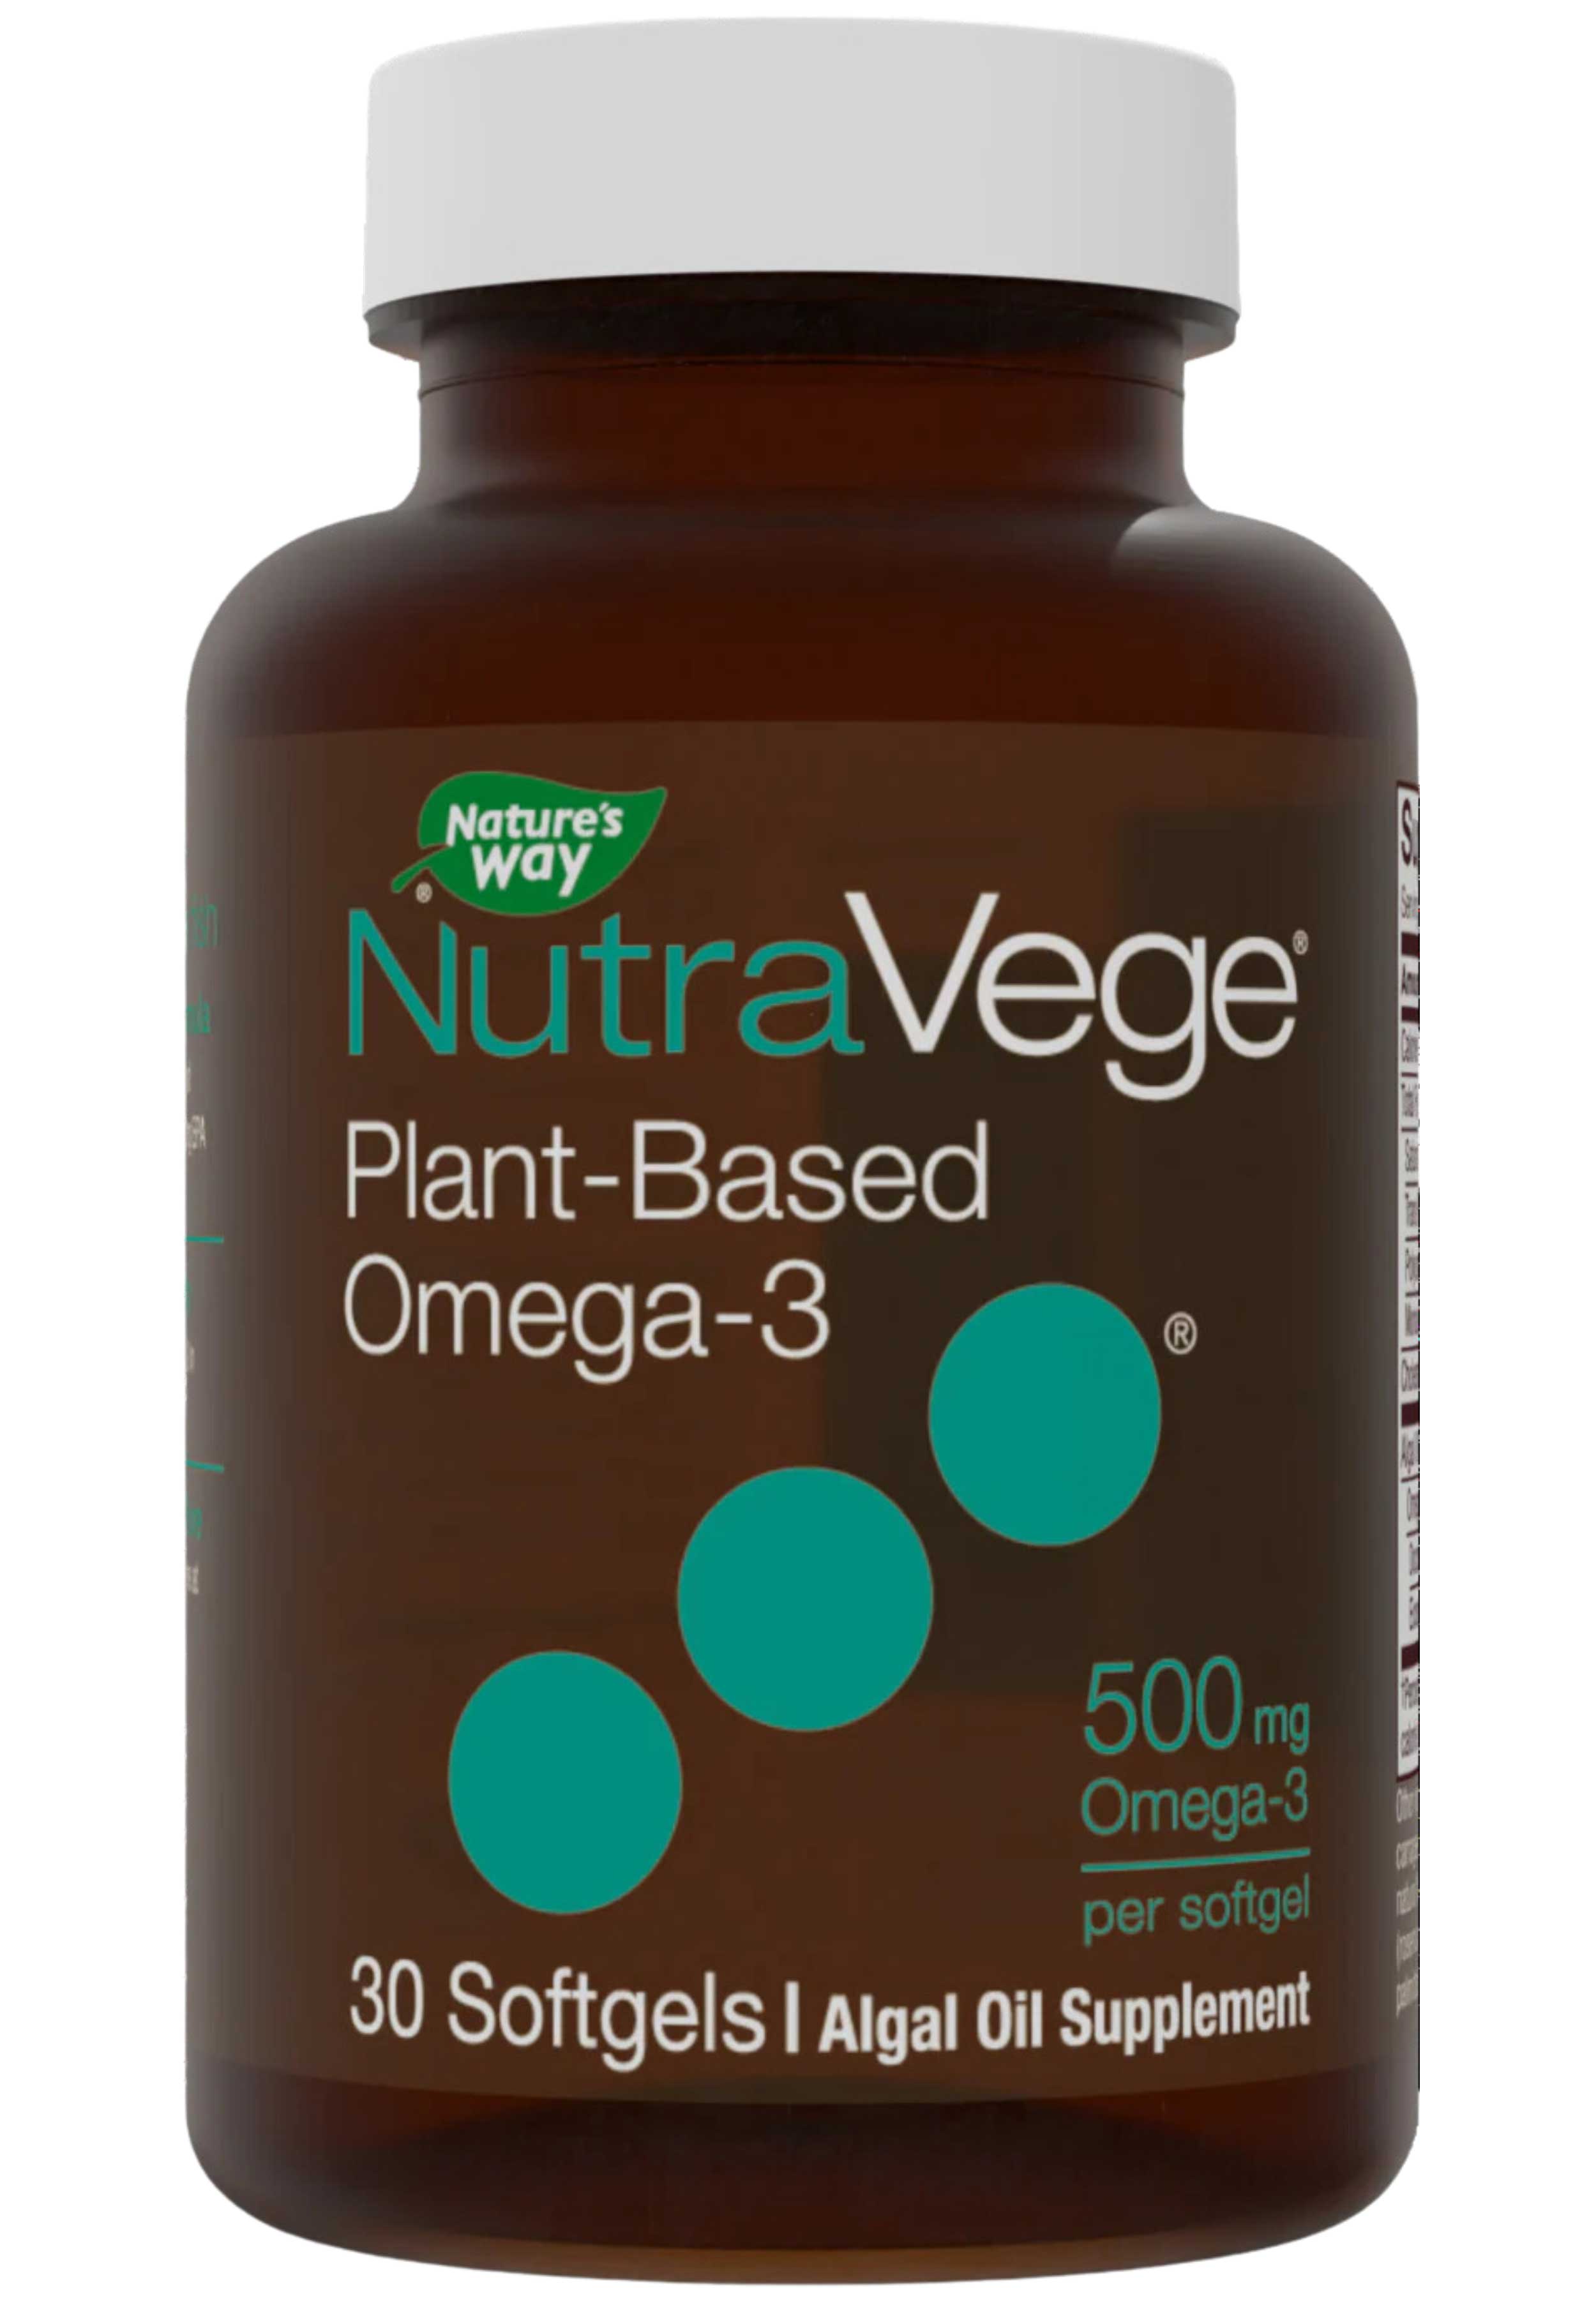 Nature's Way NutraVege Plant-Based Omega-3